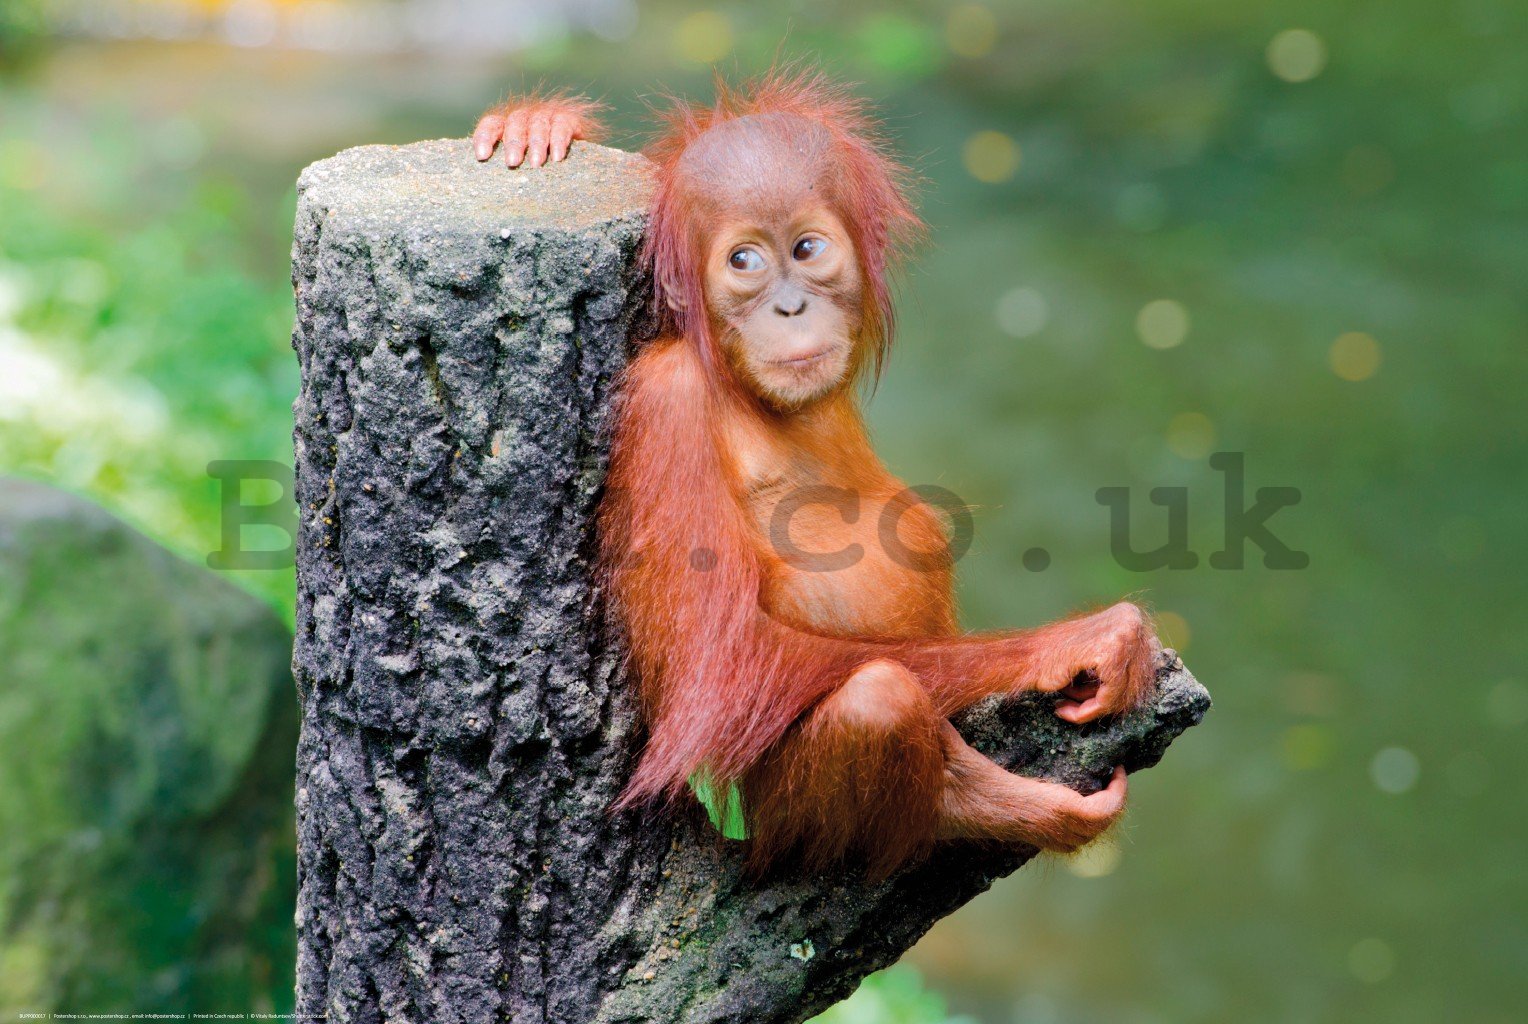 Poster: Baby orangutan